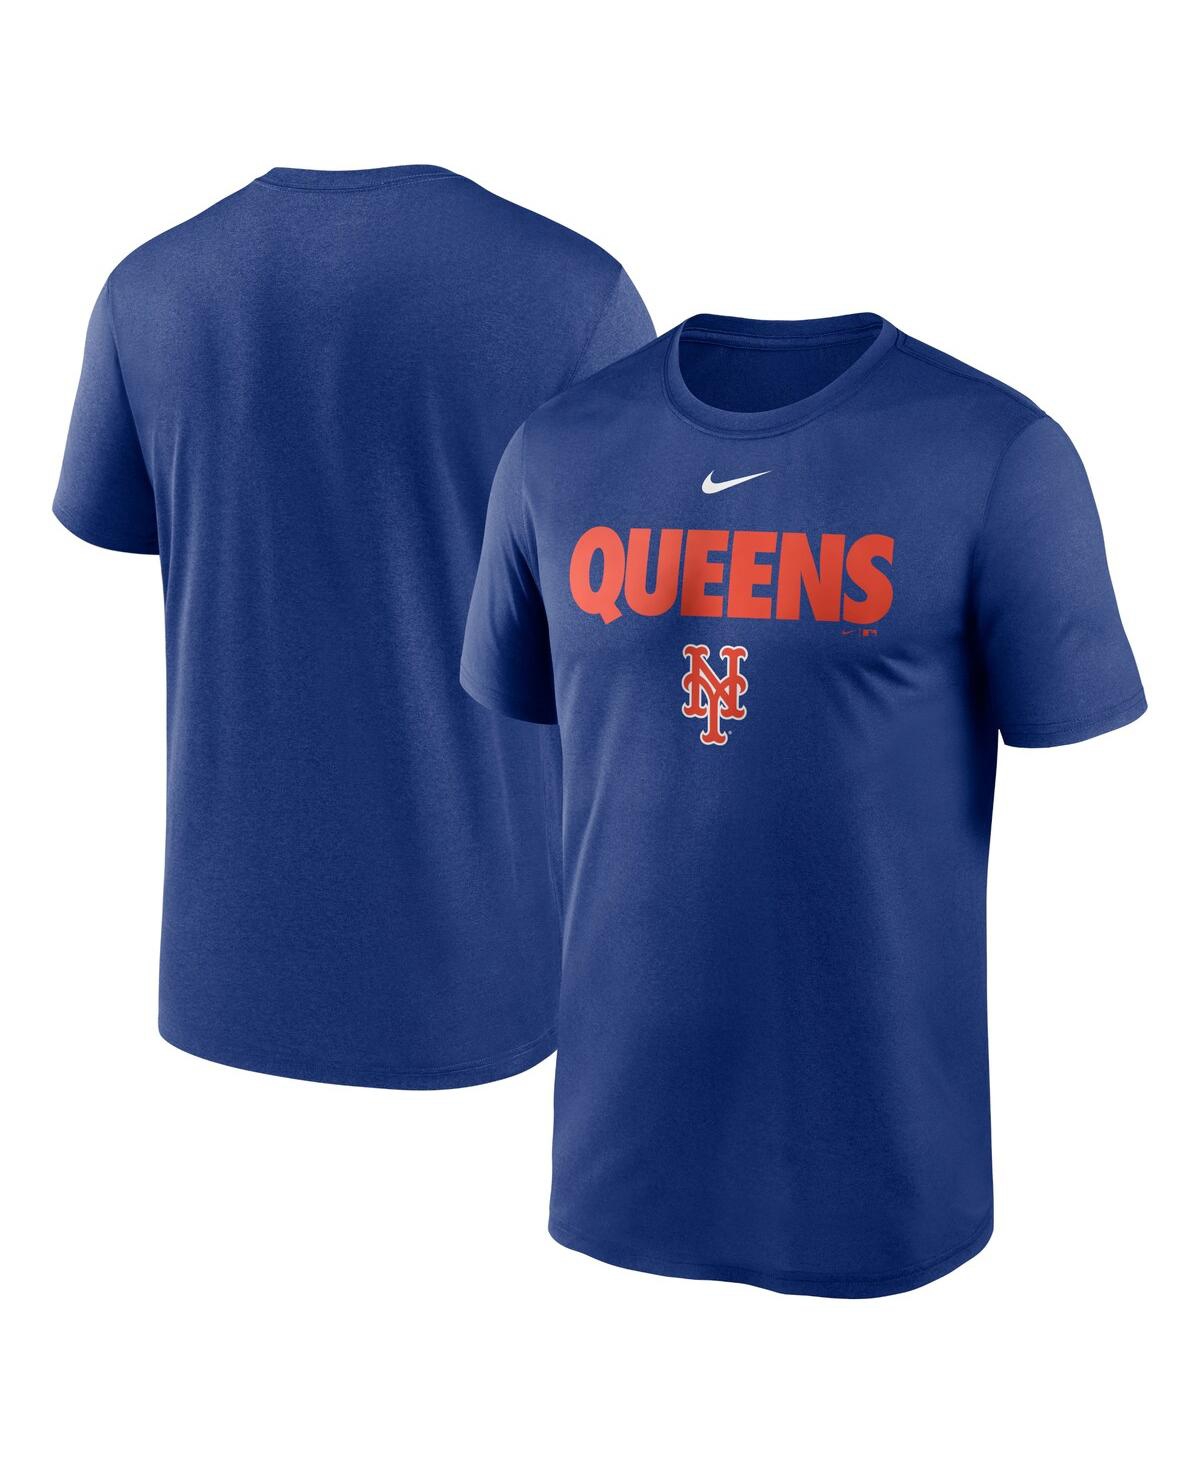 Men's Nike Royal New York Mets Local Club Rep Performance T-shirt